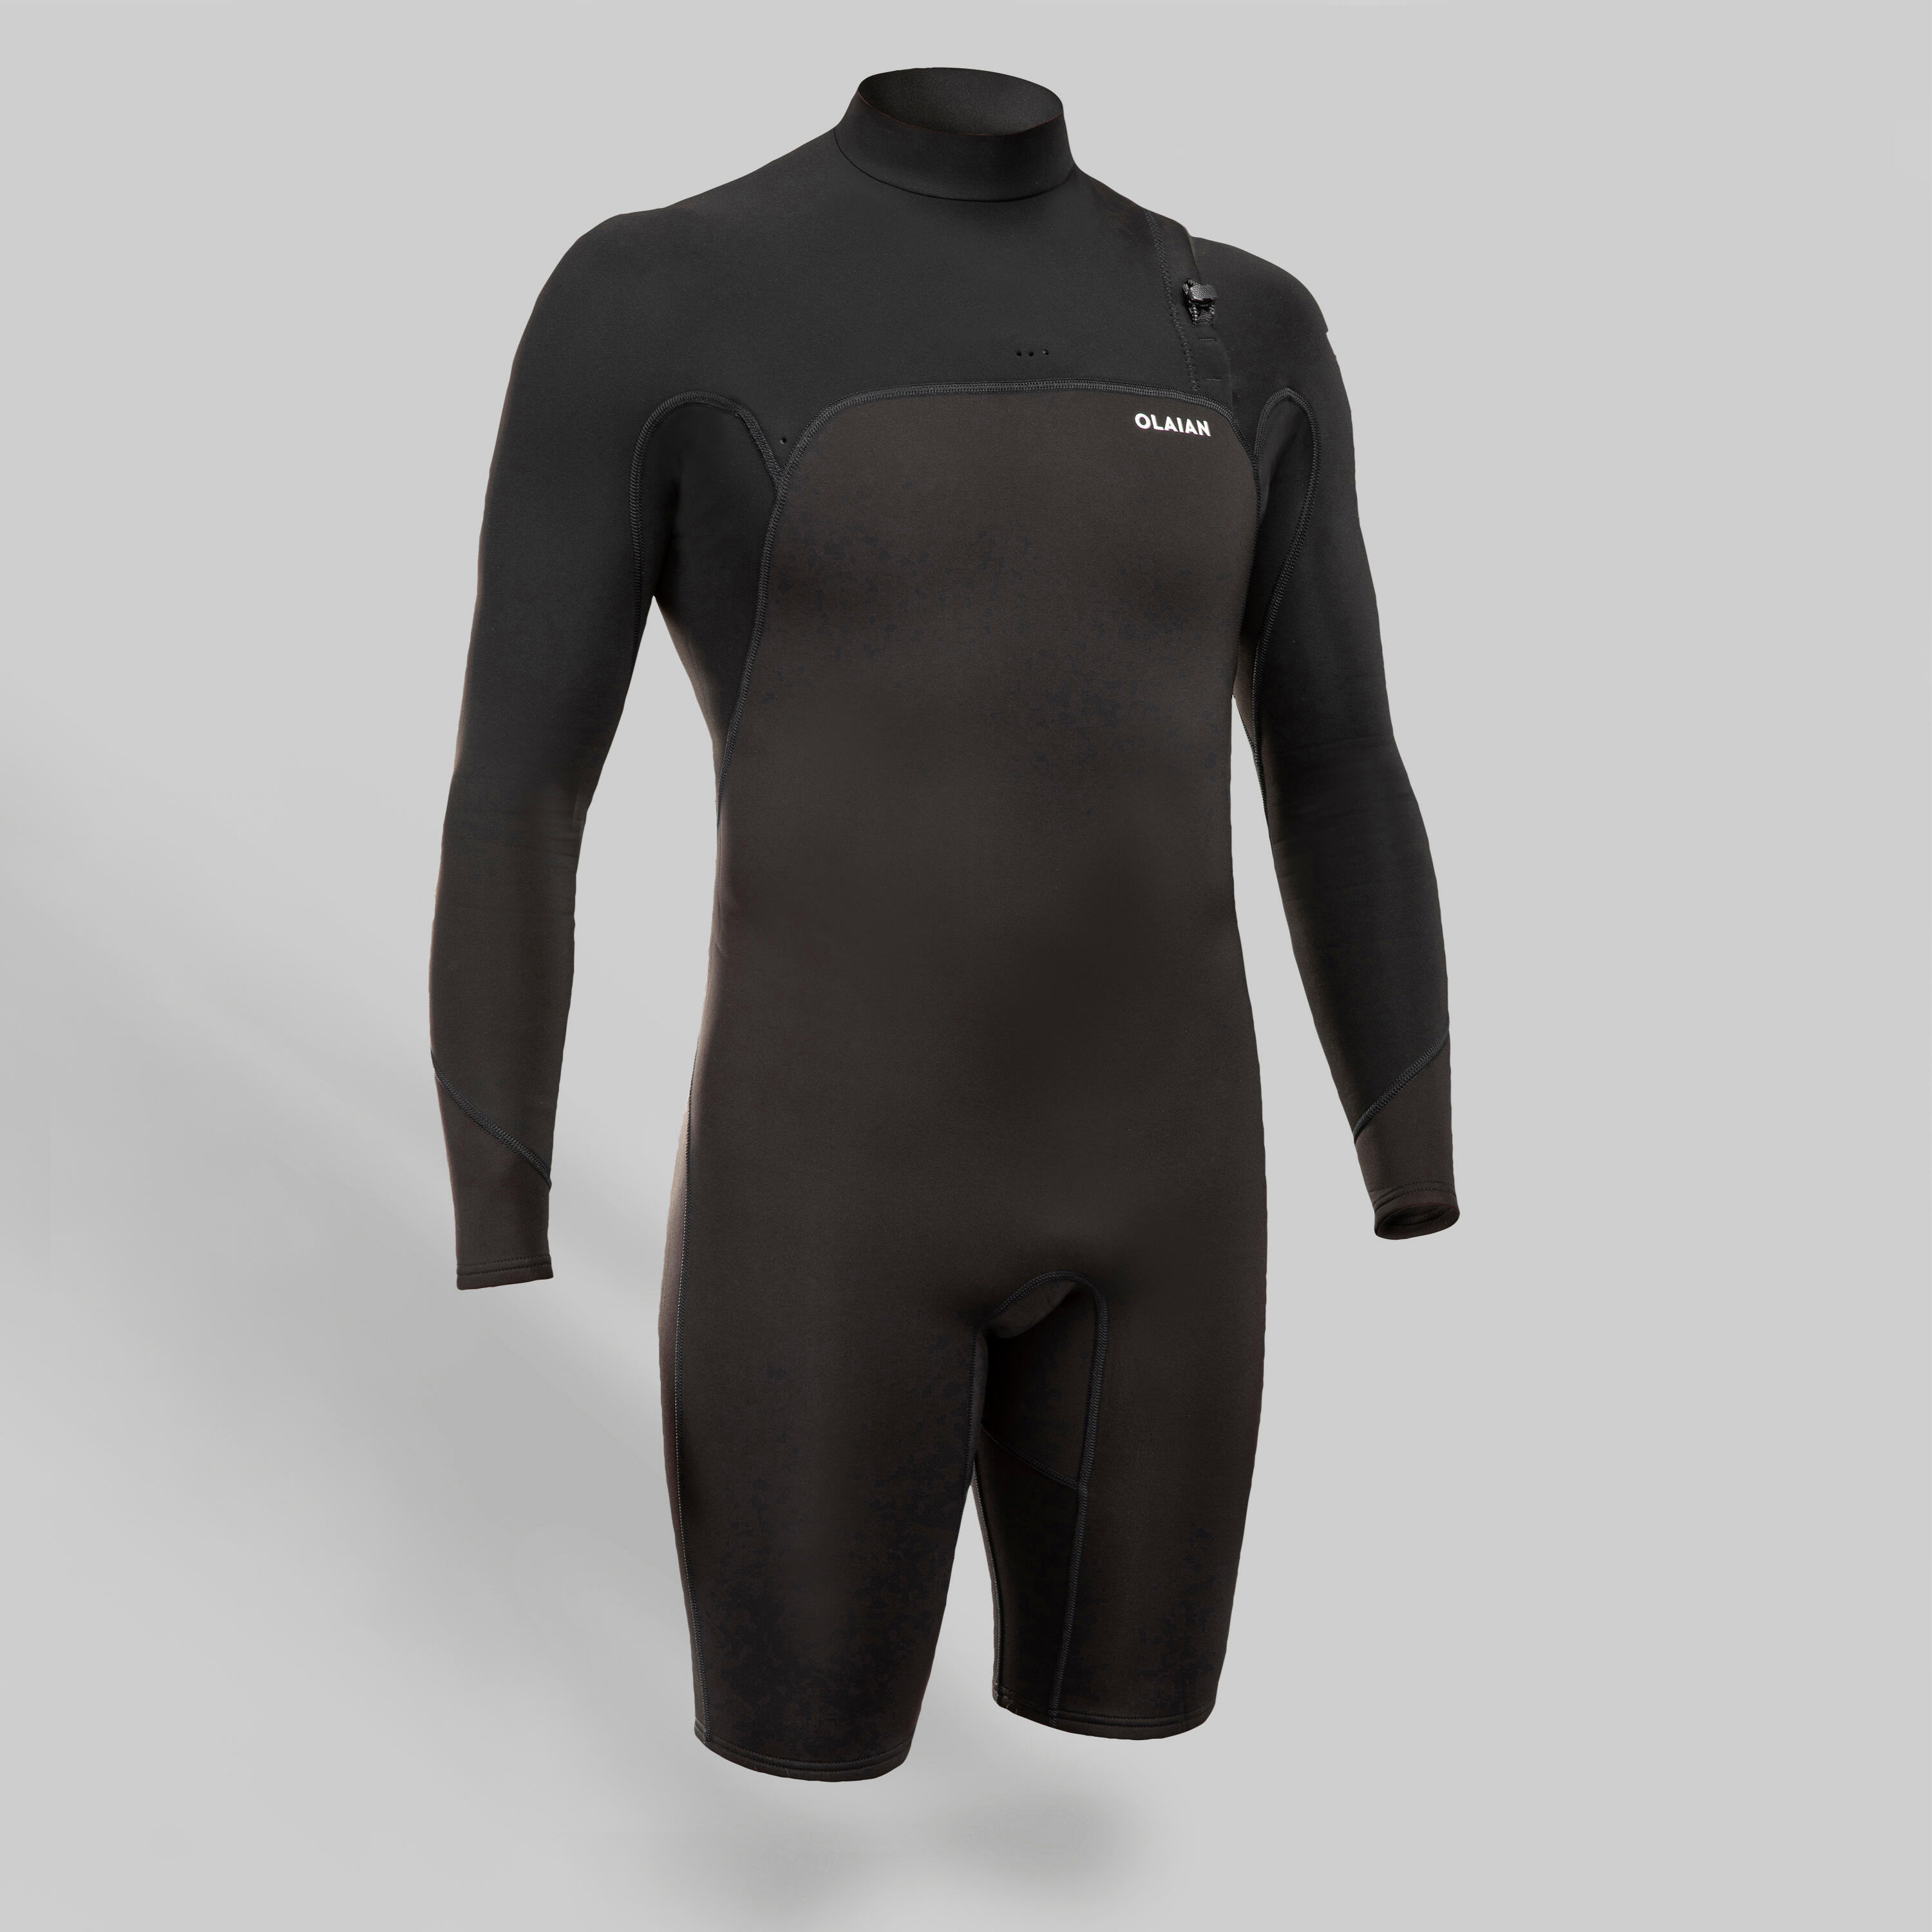 OLAIAN Men's Surfing Neoprene Long Sleeve No Zip Shorty Wetsuit 900 1.5 mm - Black